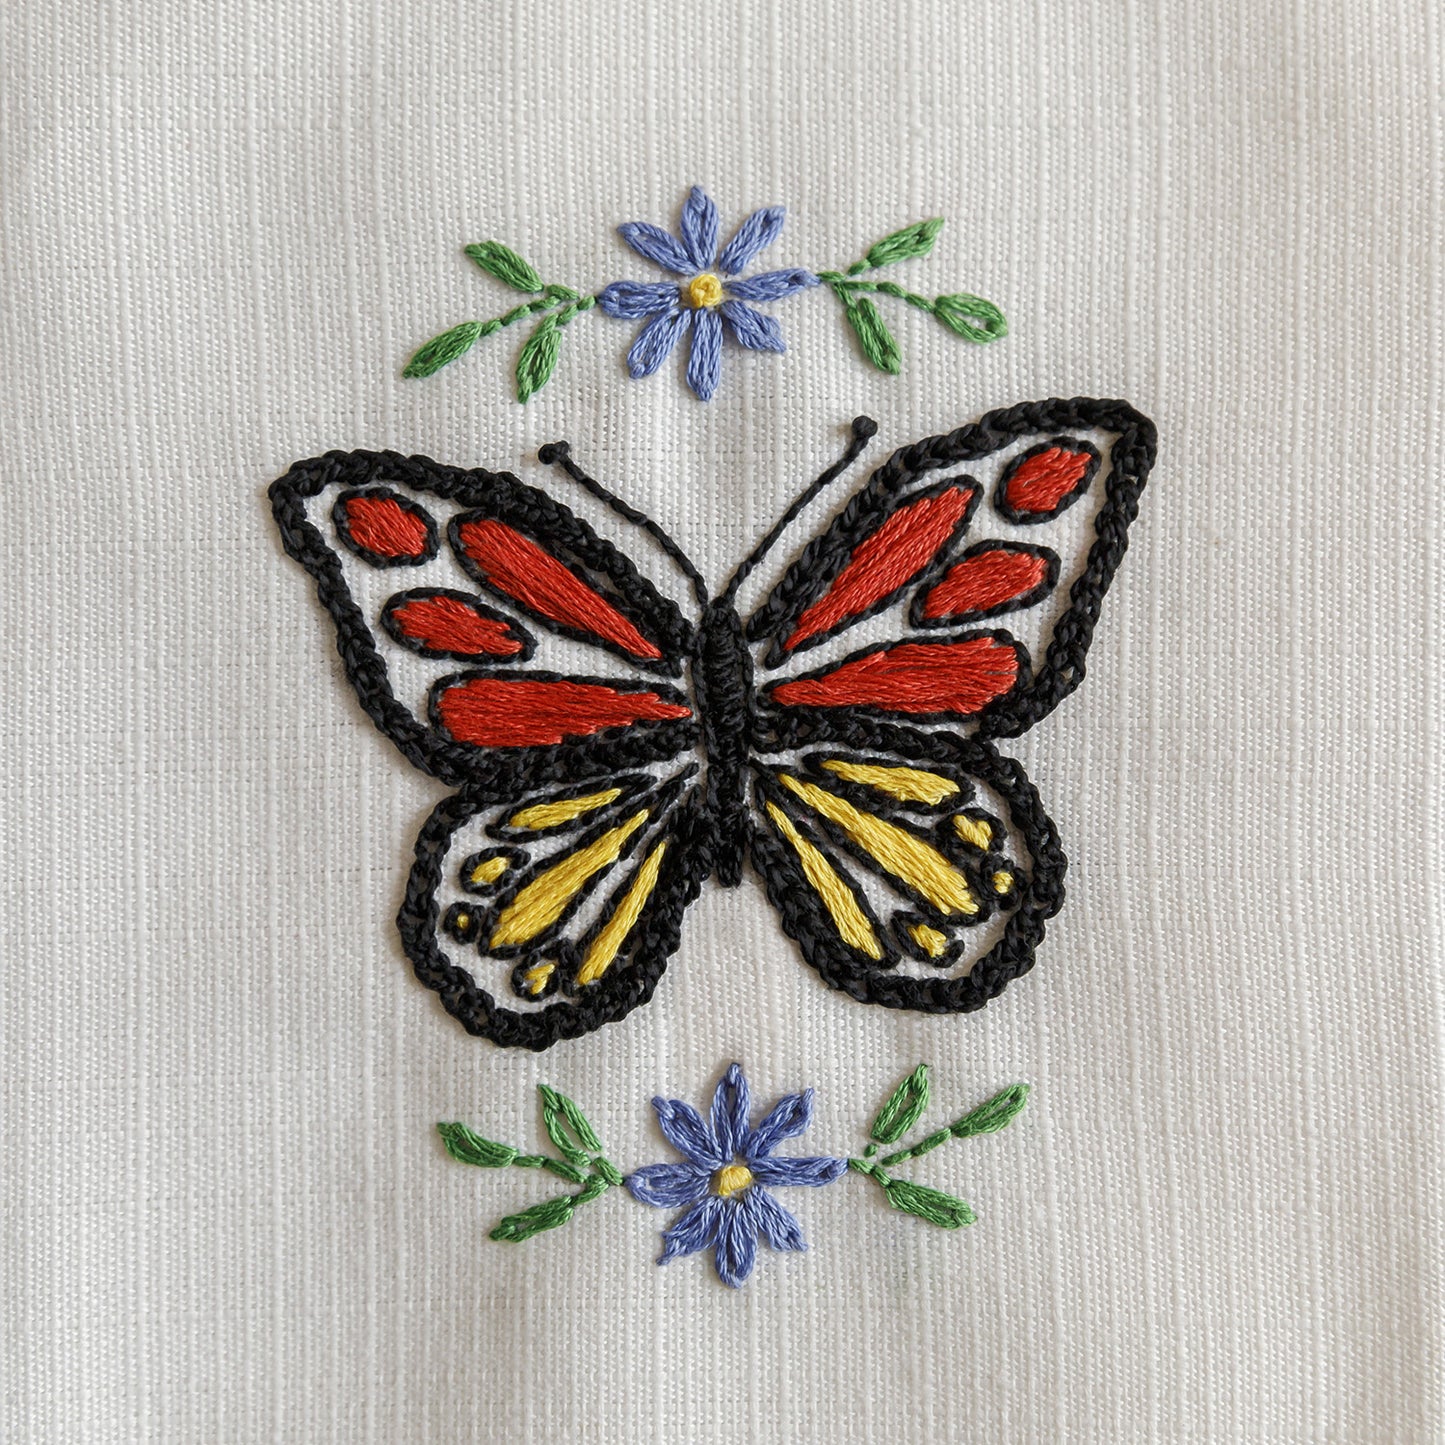 PREORDER - Learn Embroidery Stitch by Stitch with Missouri Star Alternative View #20